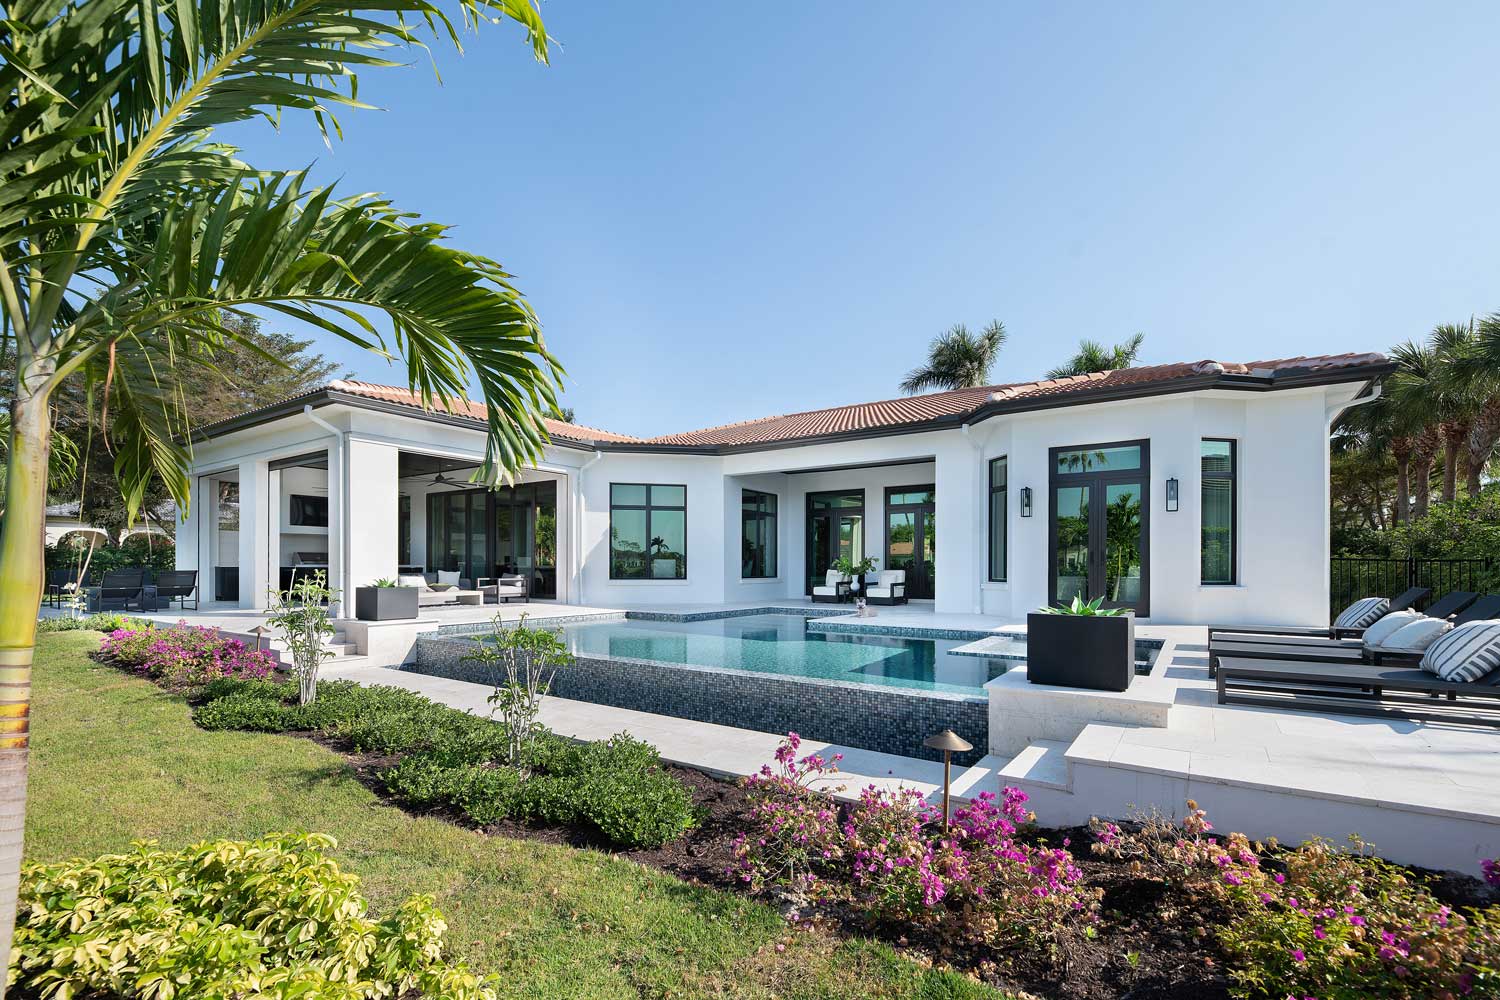 Benham-residence-backyard-pool